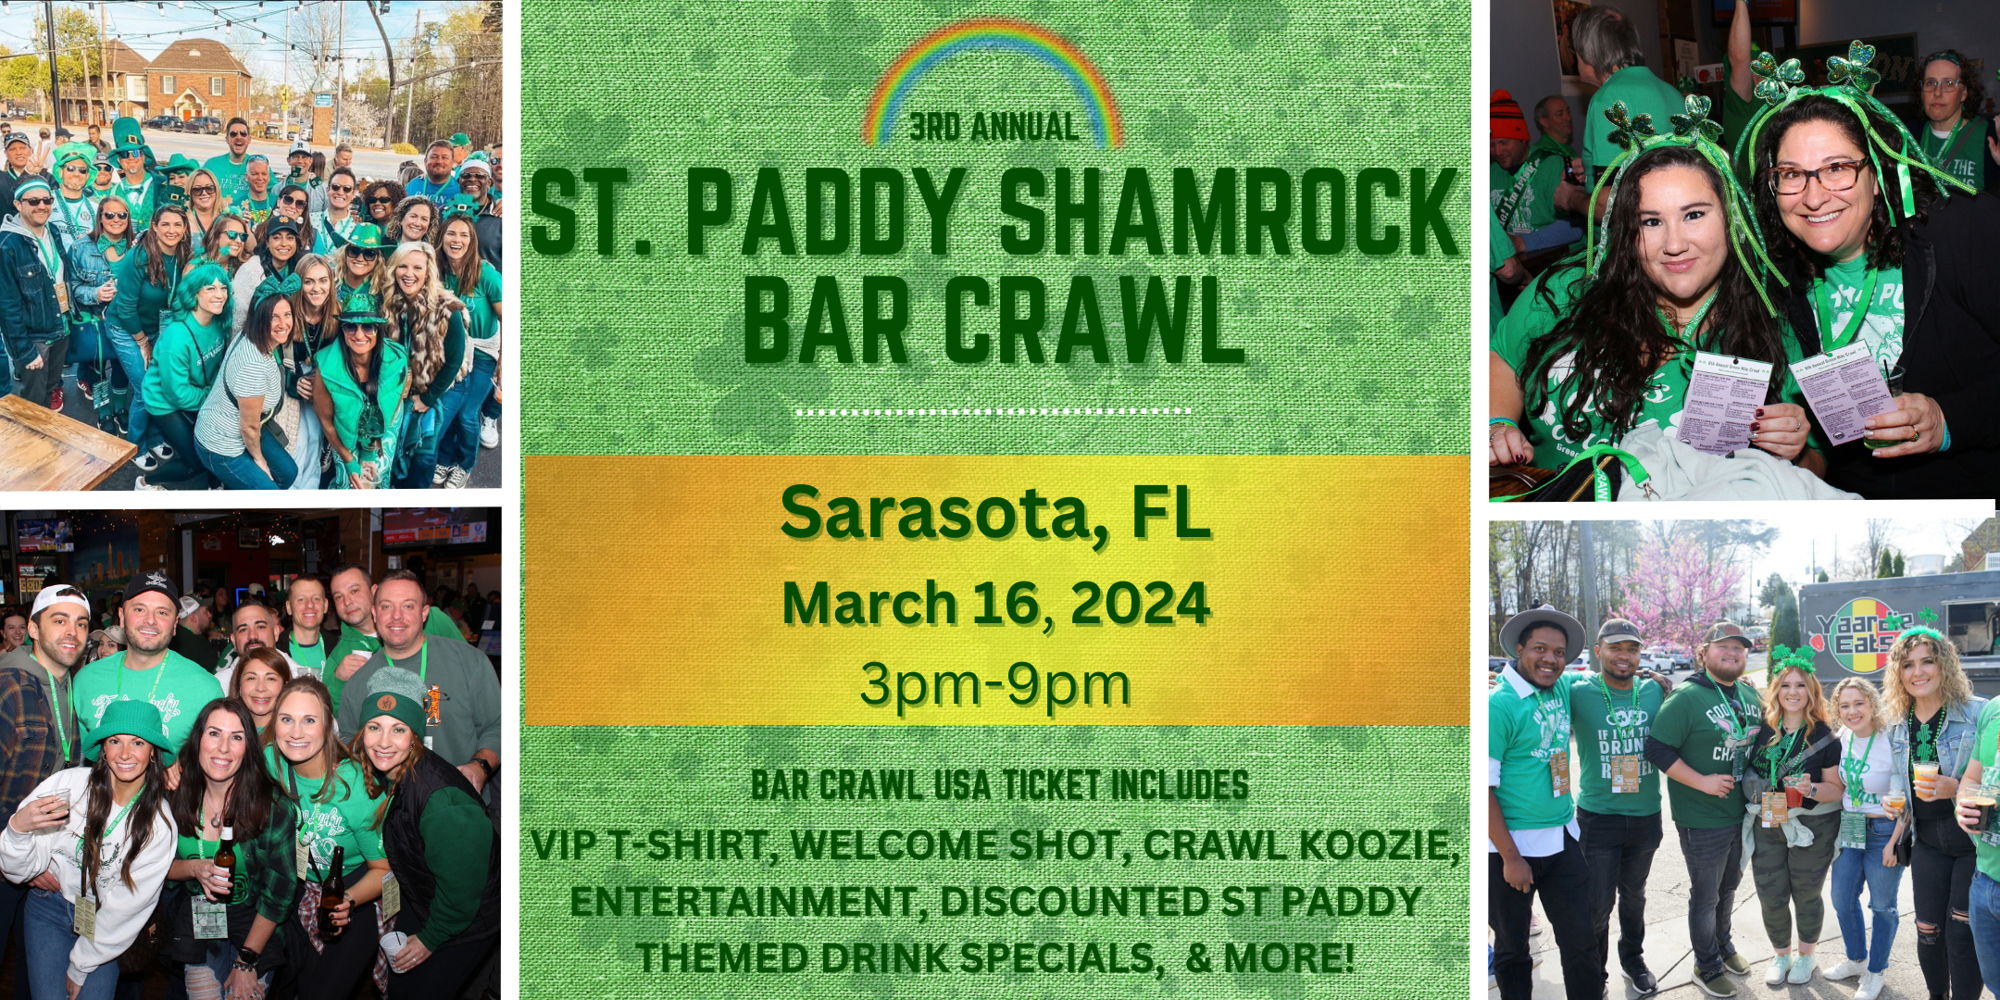 3rd Annual St. Patrick's Shamrock Bar Crawl: Sarasota promotional image